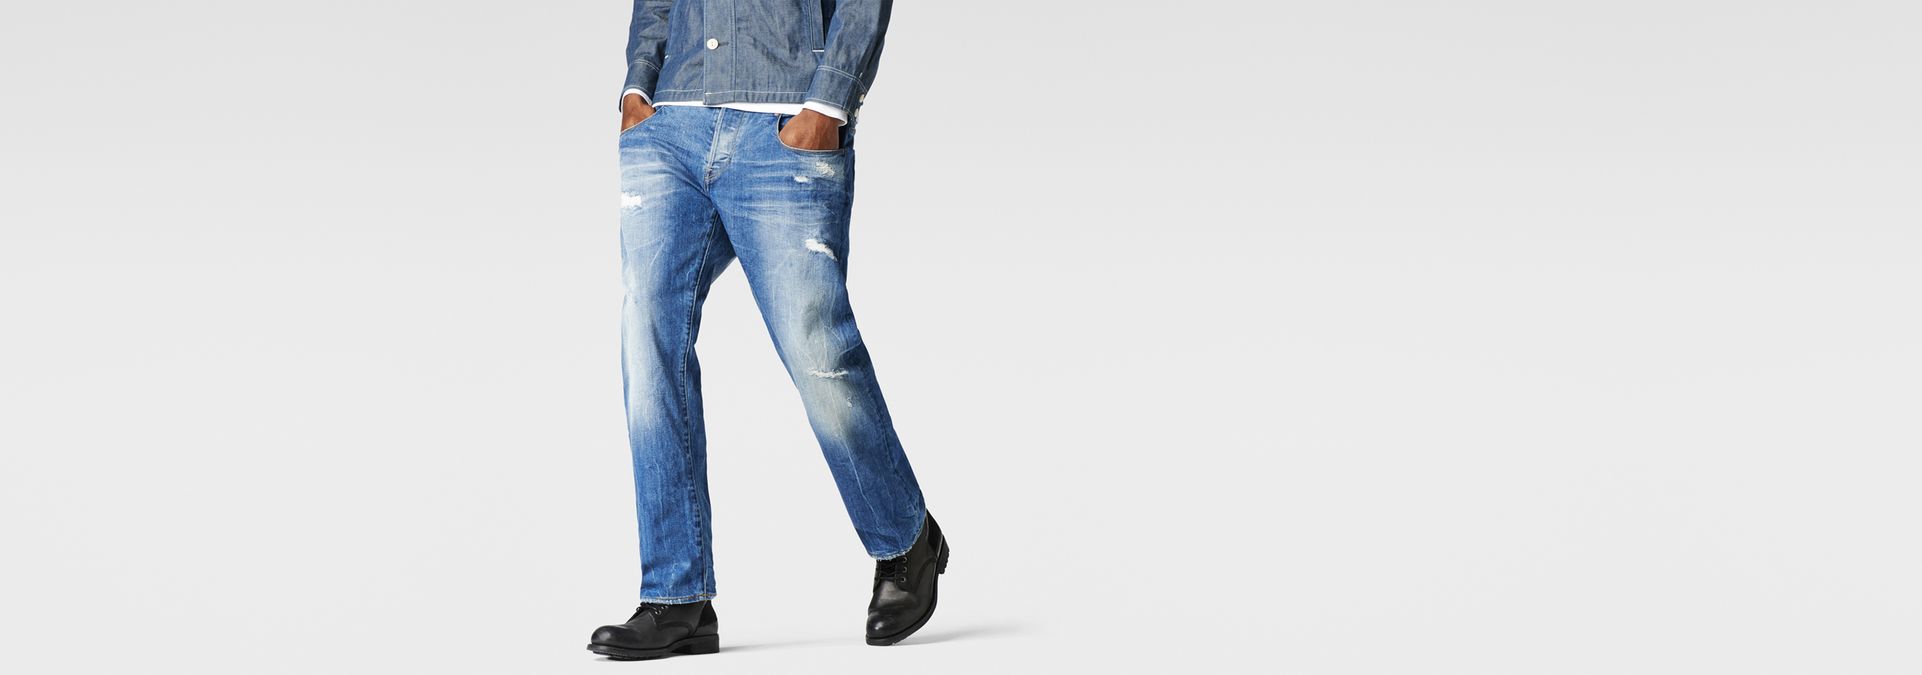 g star new radar loose mens jeans